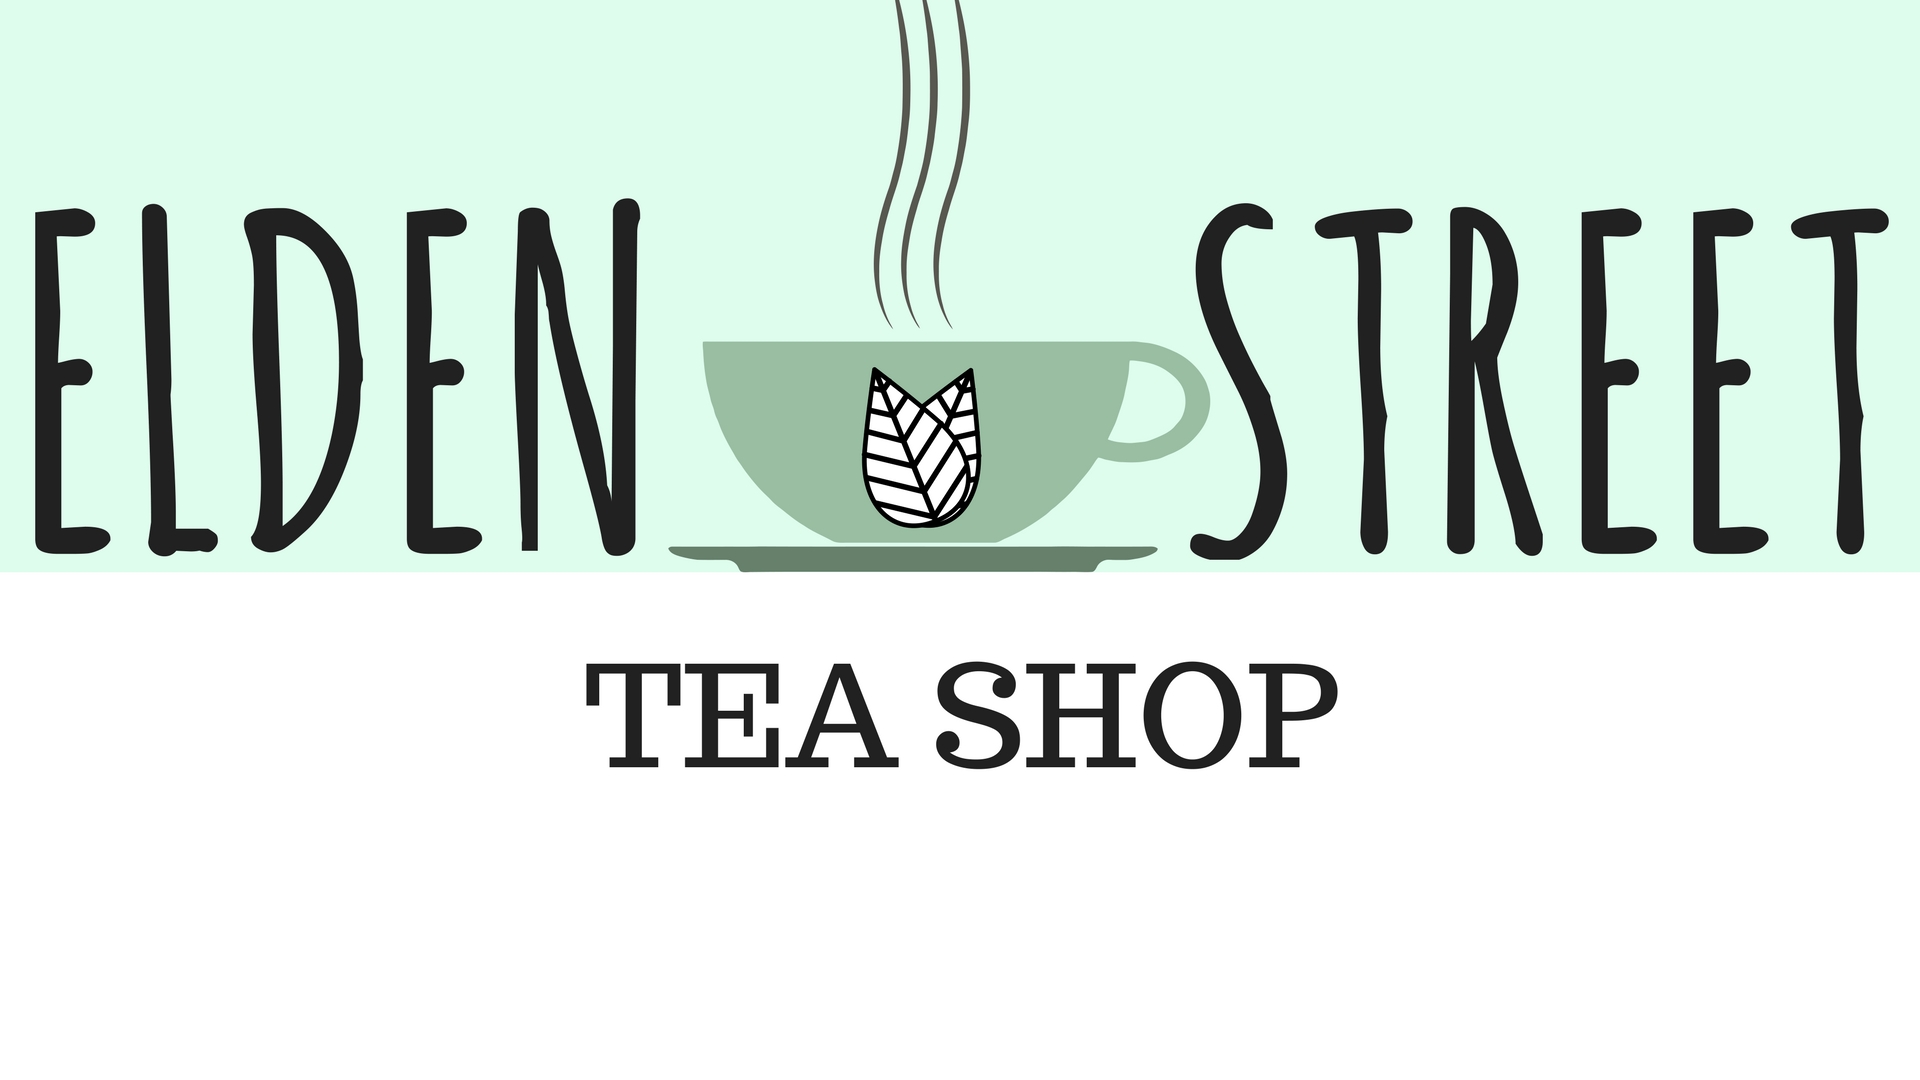 Elden Street Tea Shop Logo